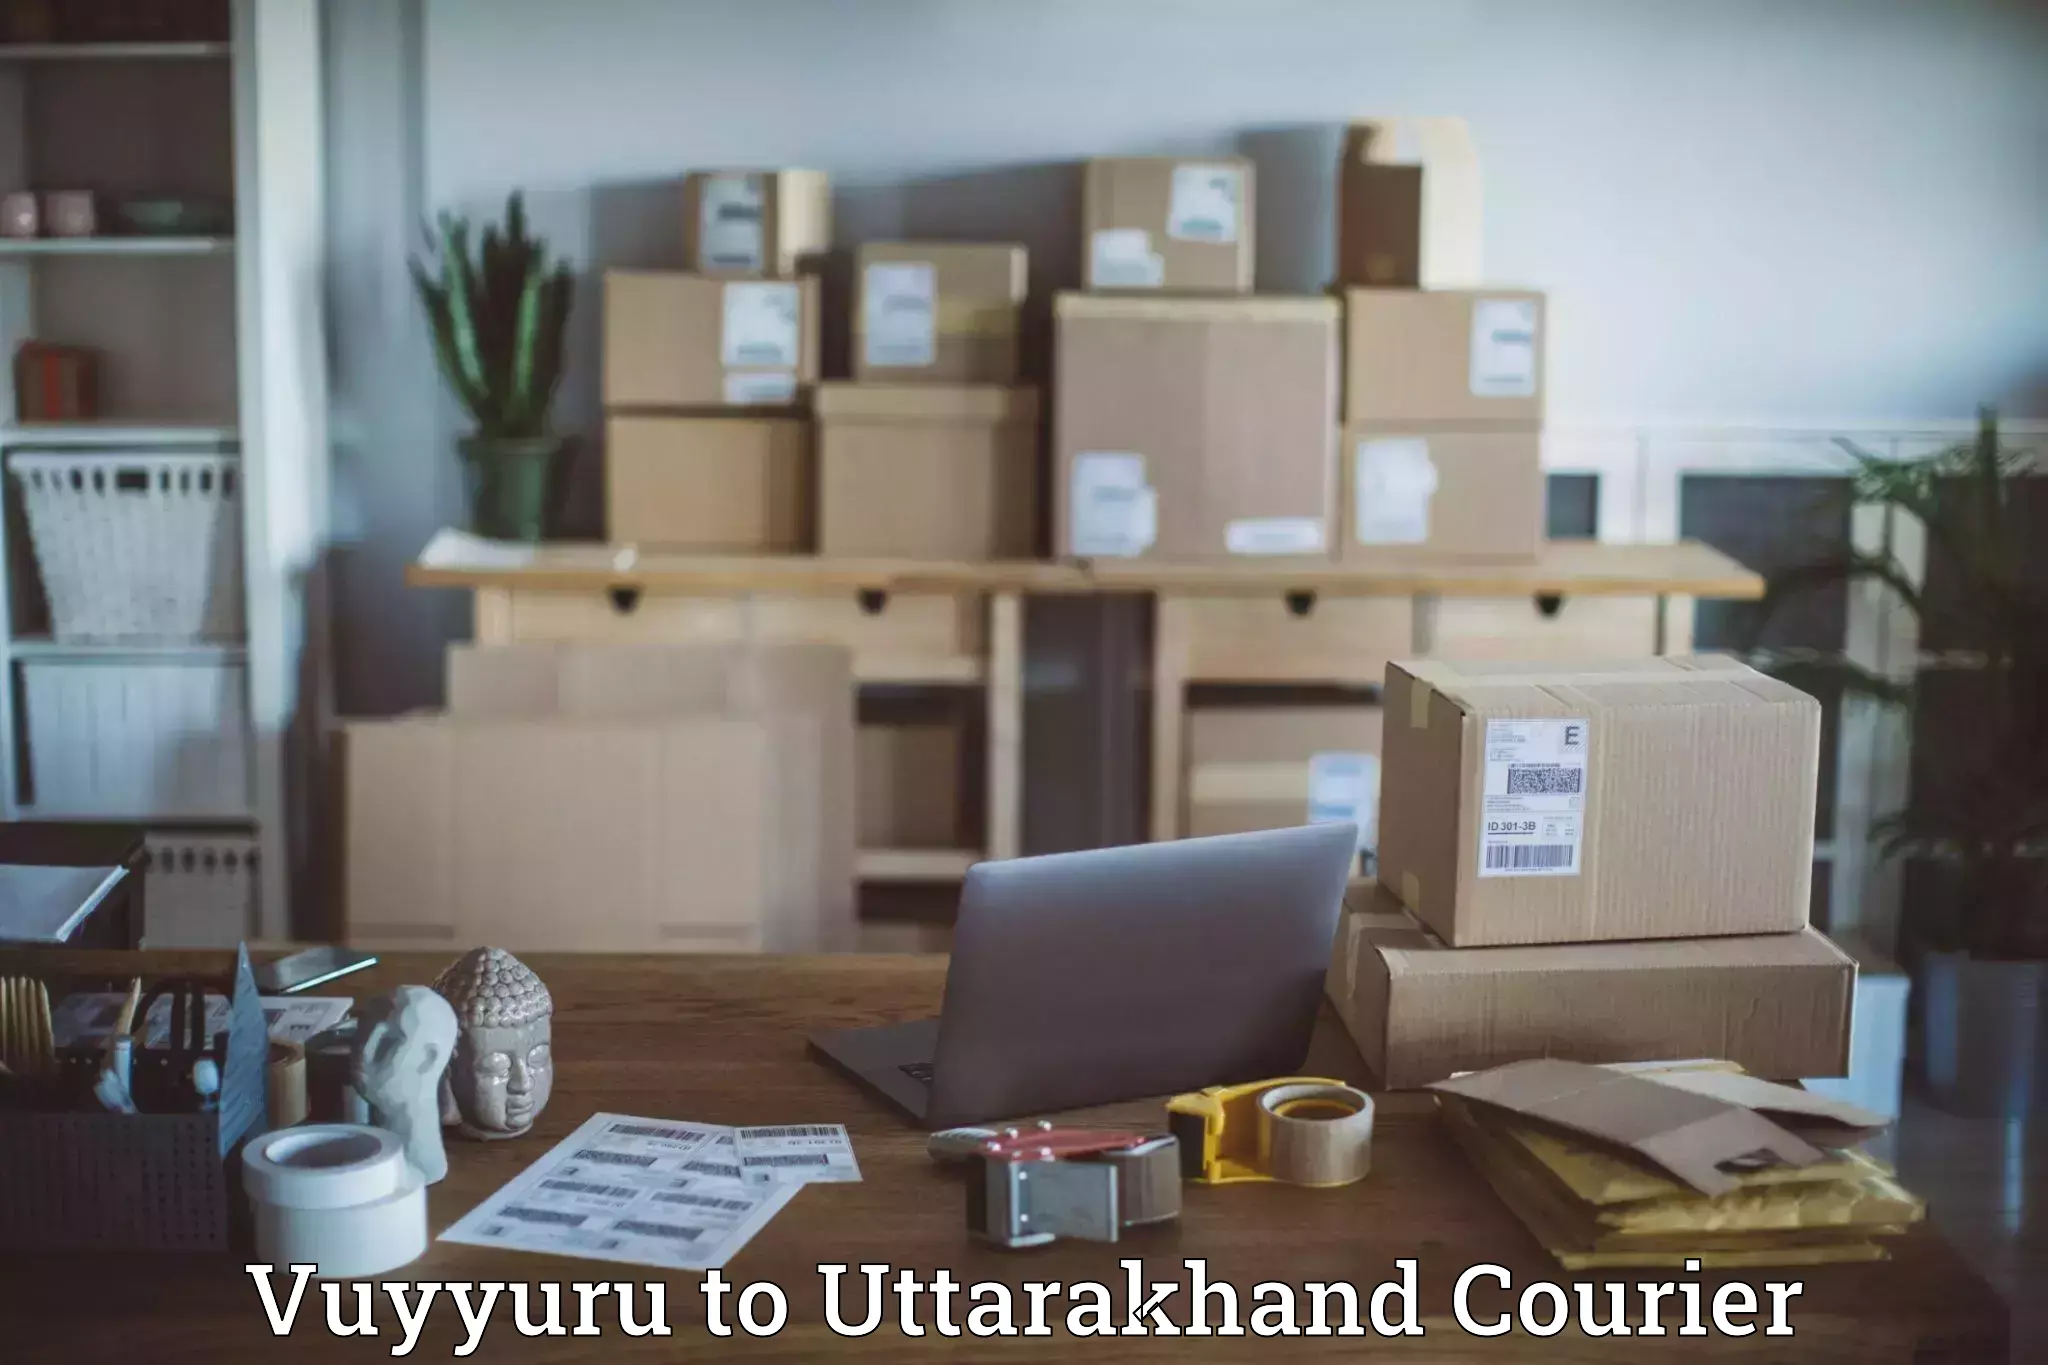 Subscription-based courier Vuyyuru to Bhagwanpur